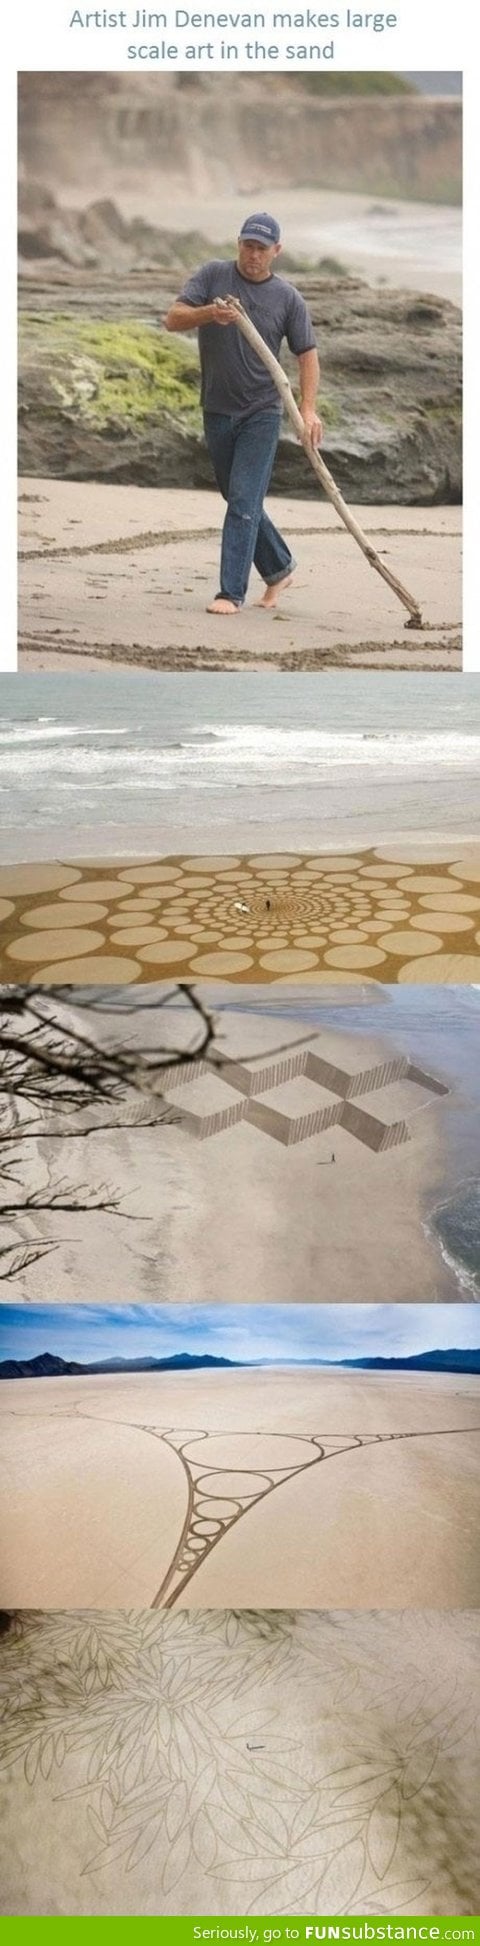 Large scale sand art